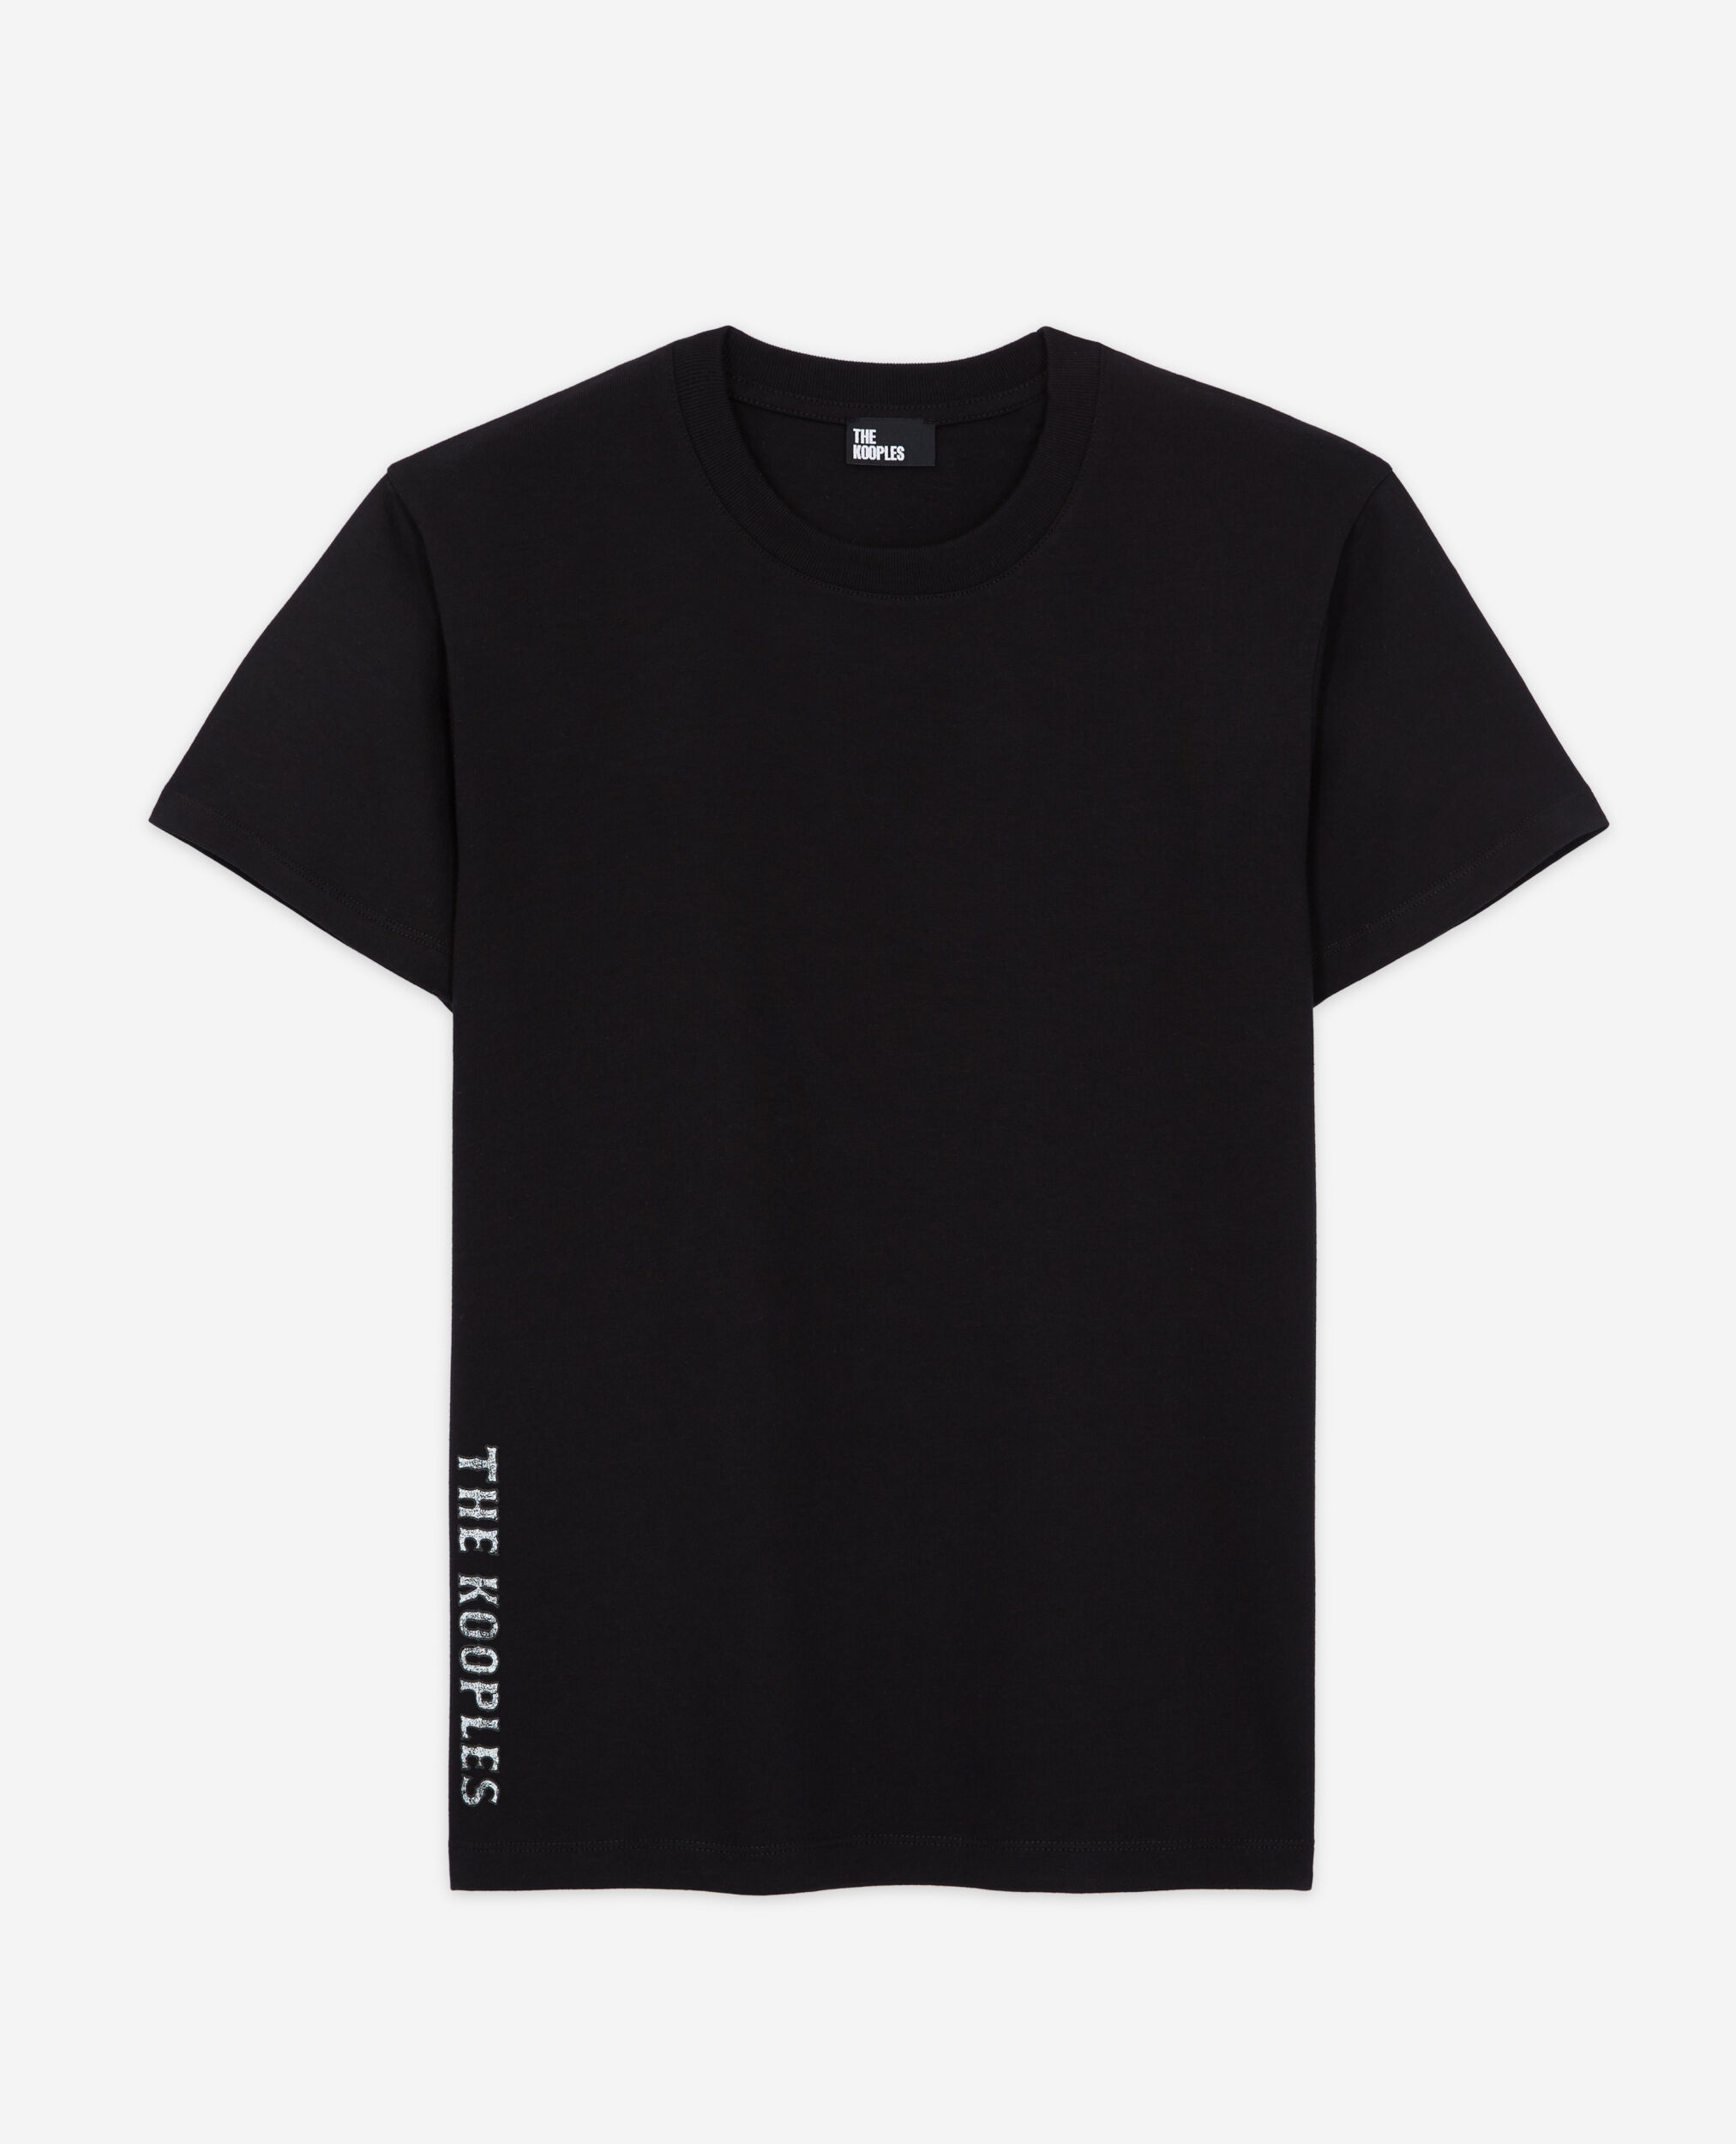 Women's black screen print t-shirt, BLACK, hi-res image number null